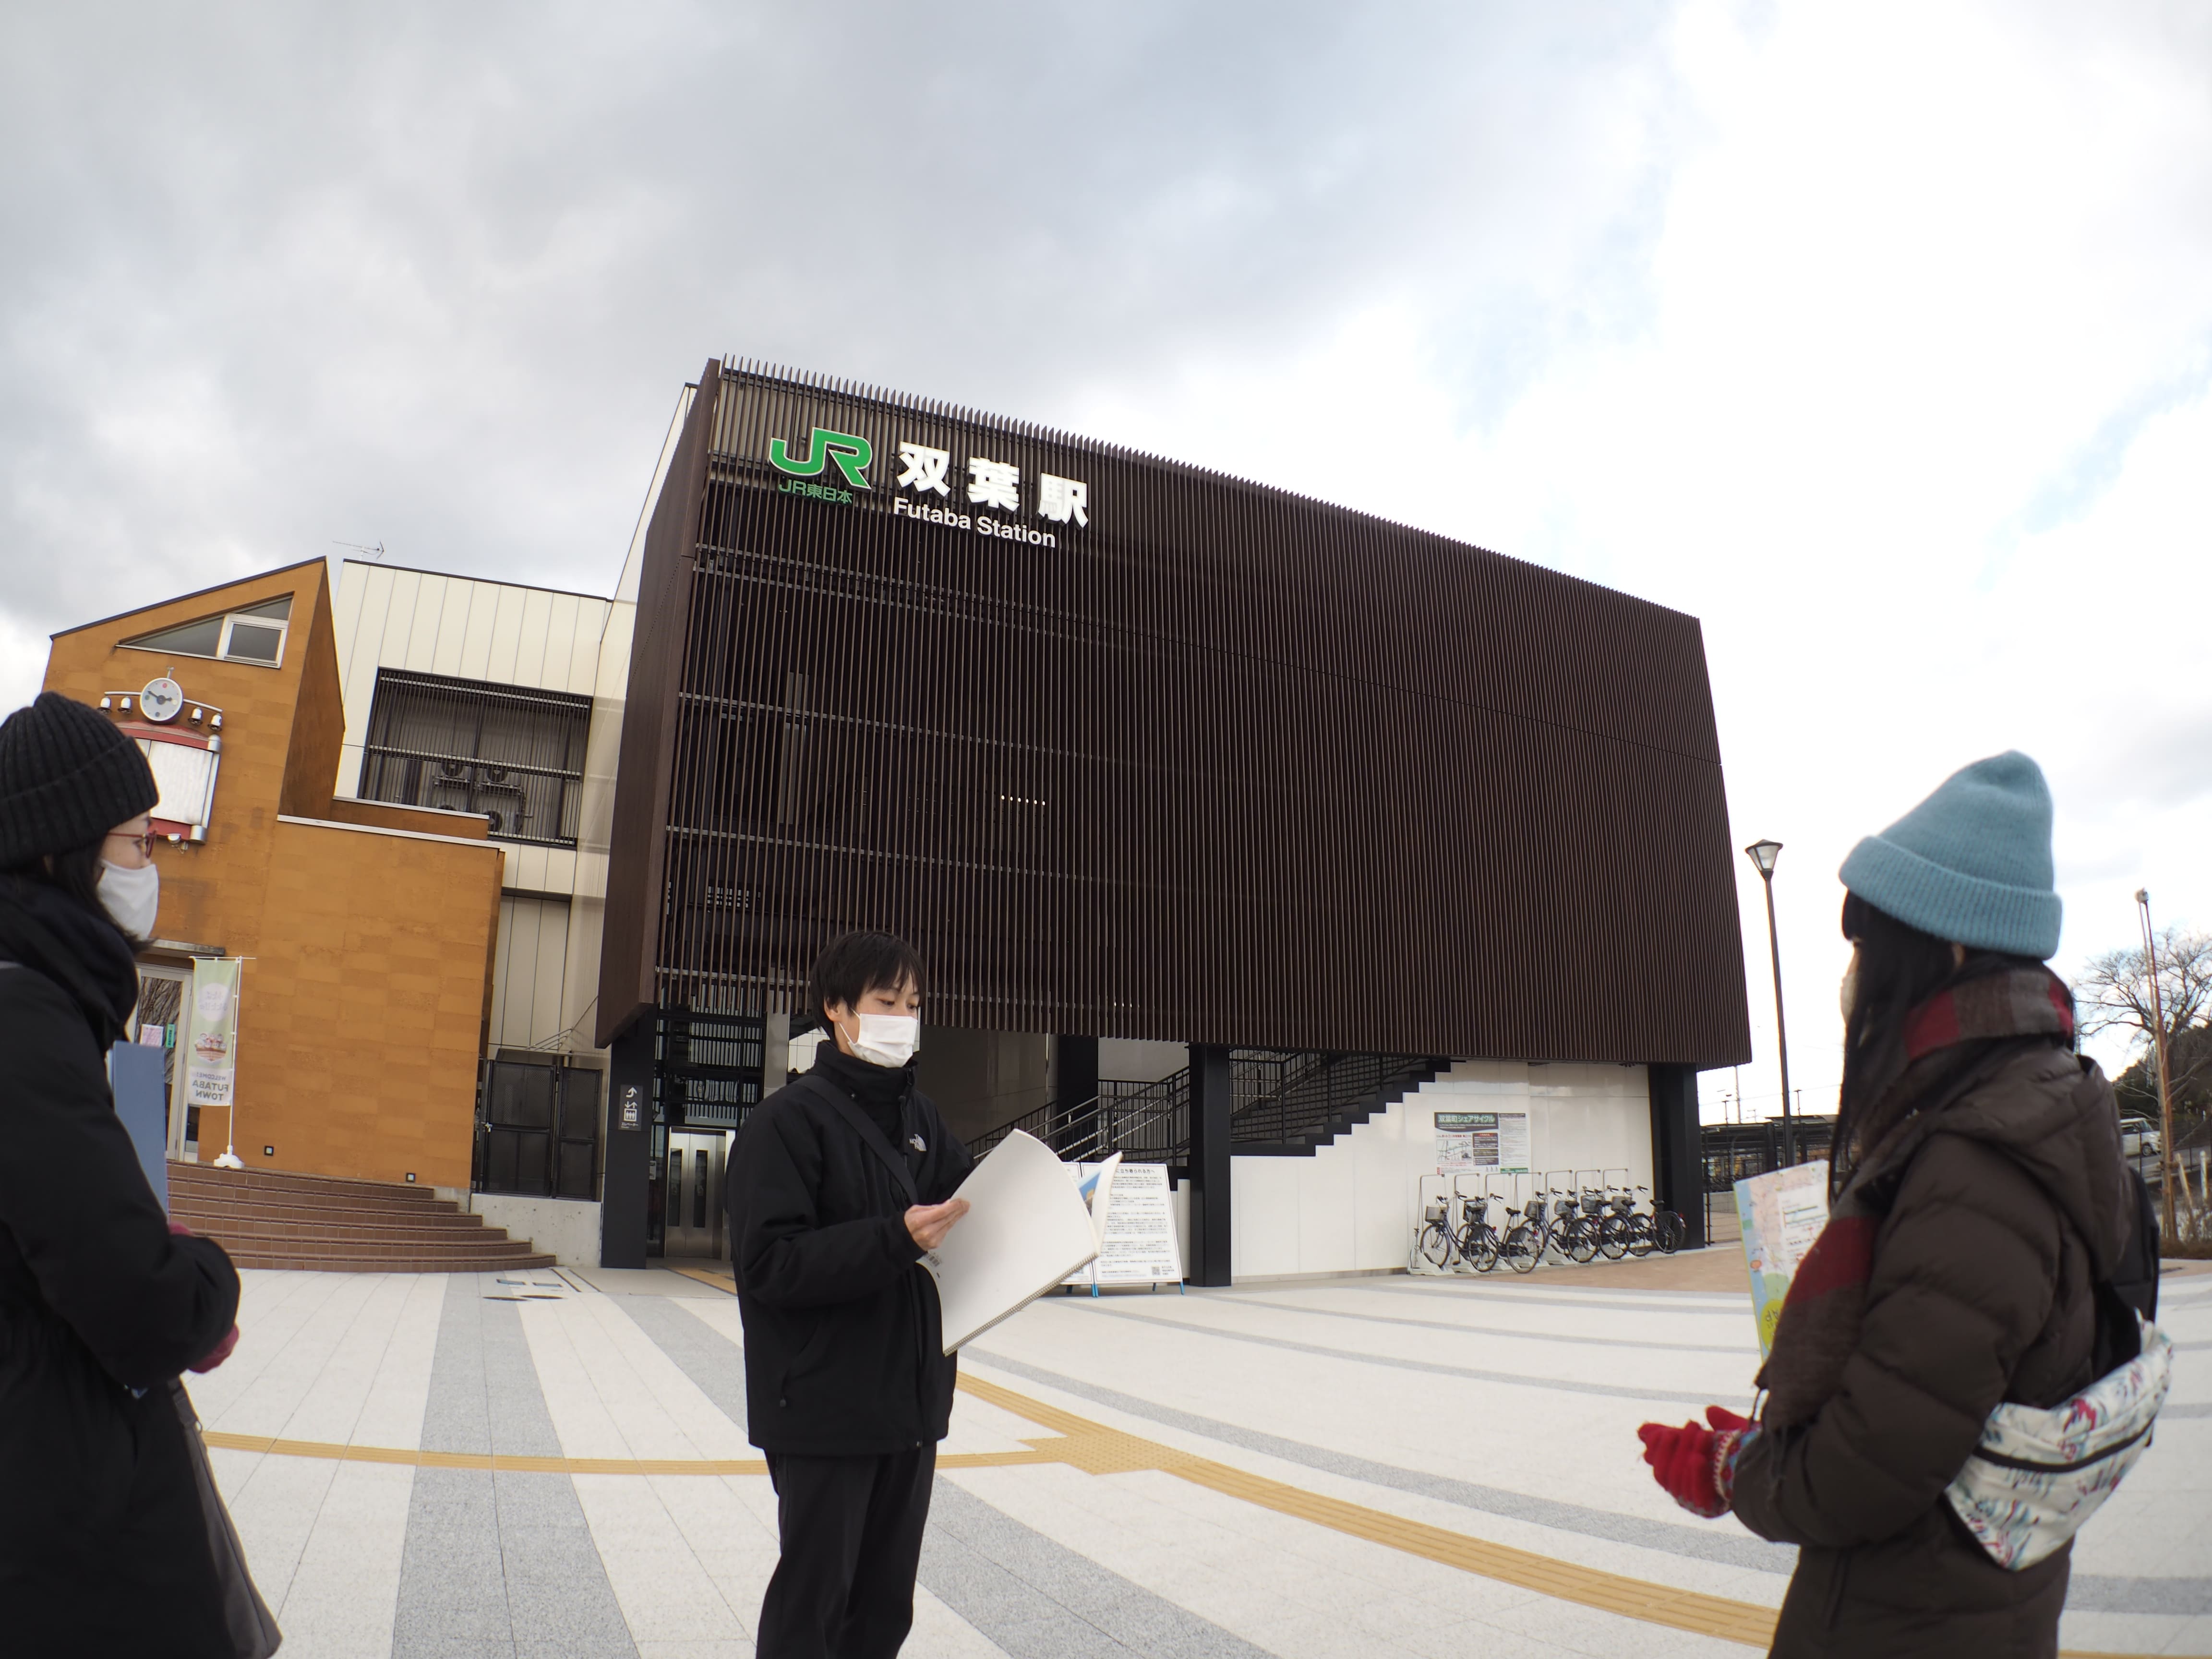 JR Futaba Station